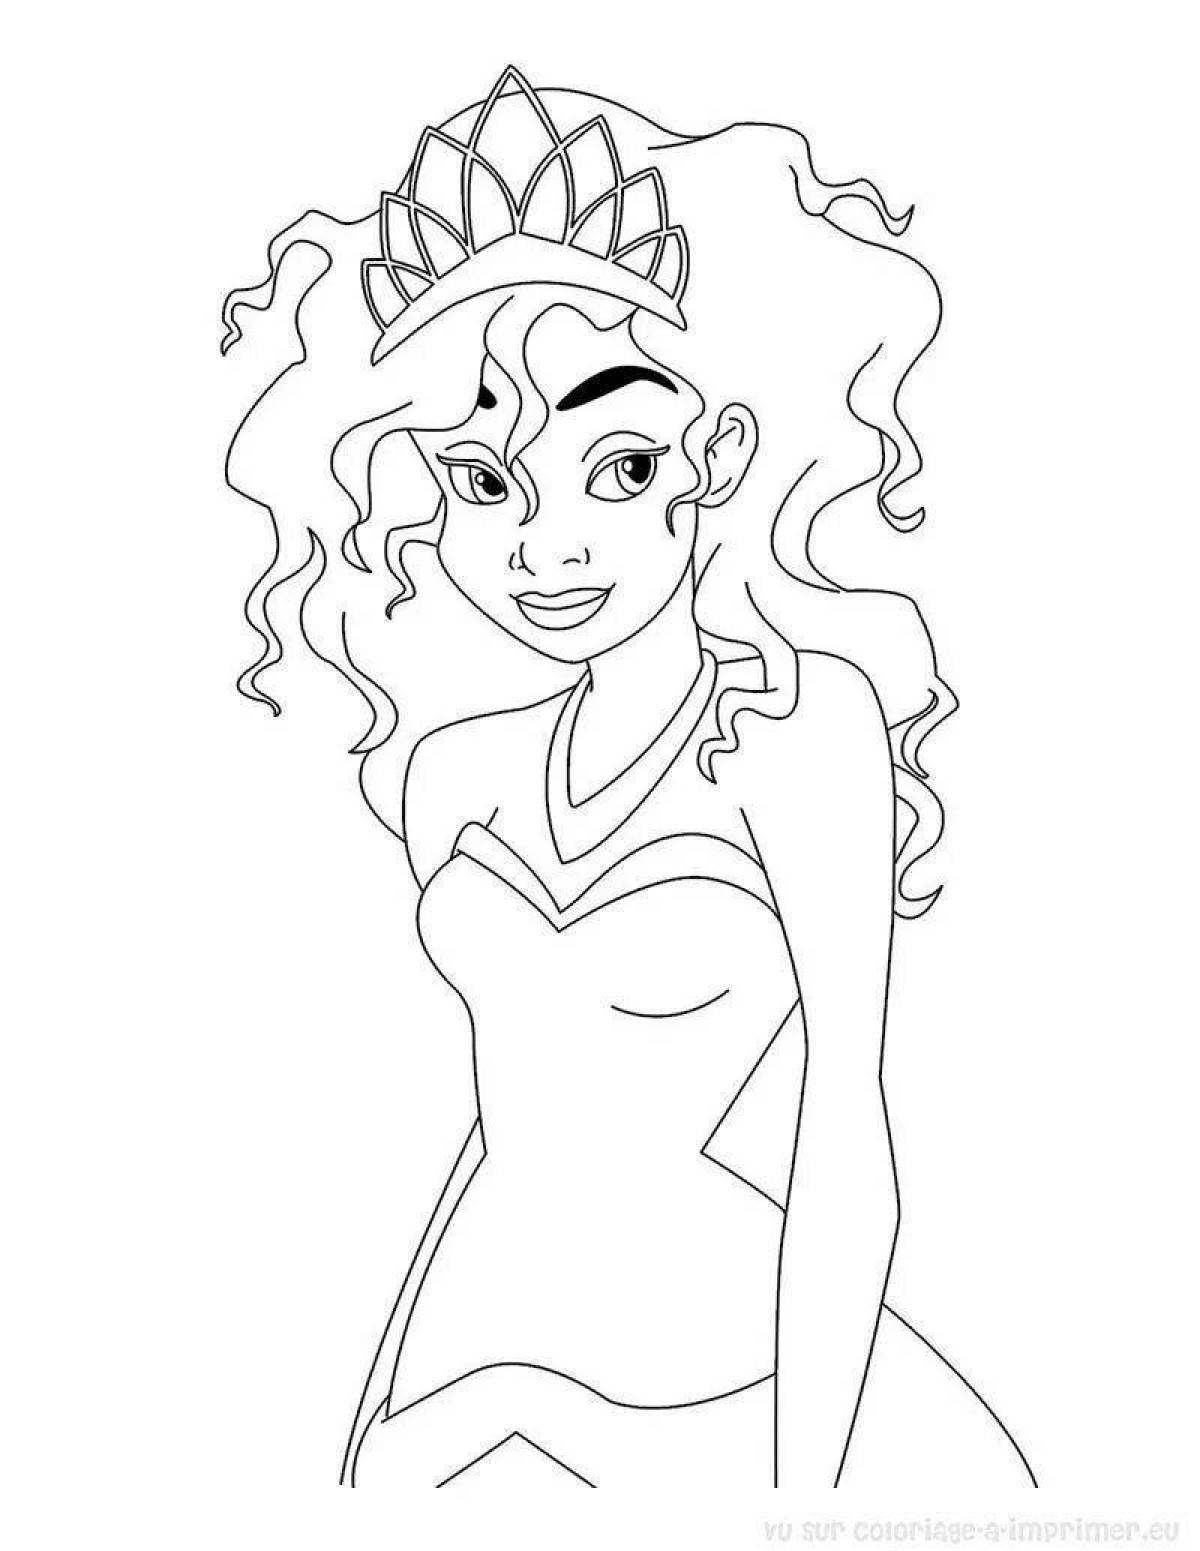 Charming princess diana coloring page